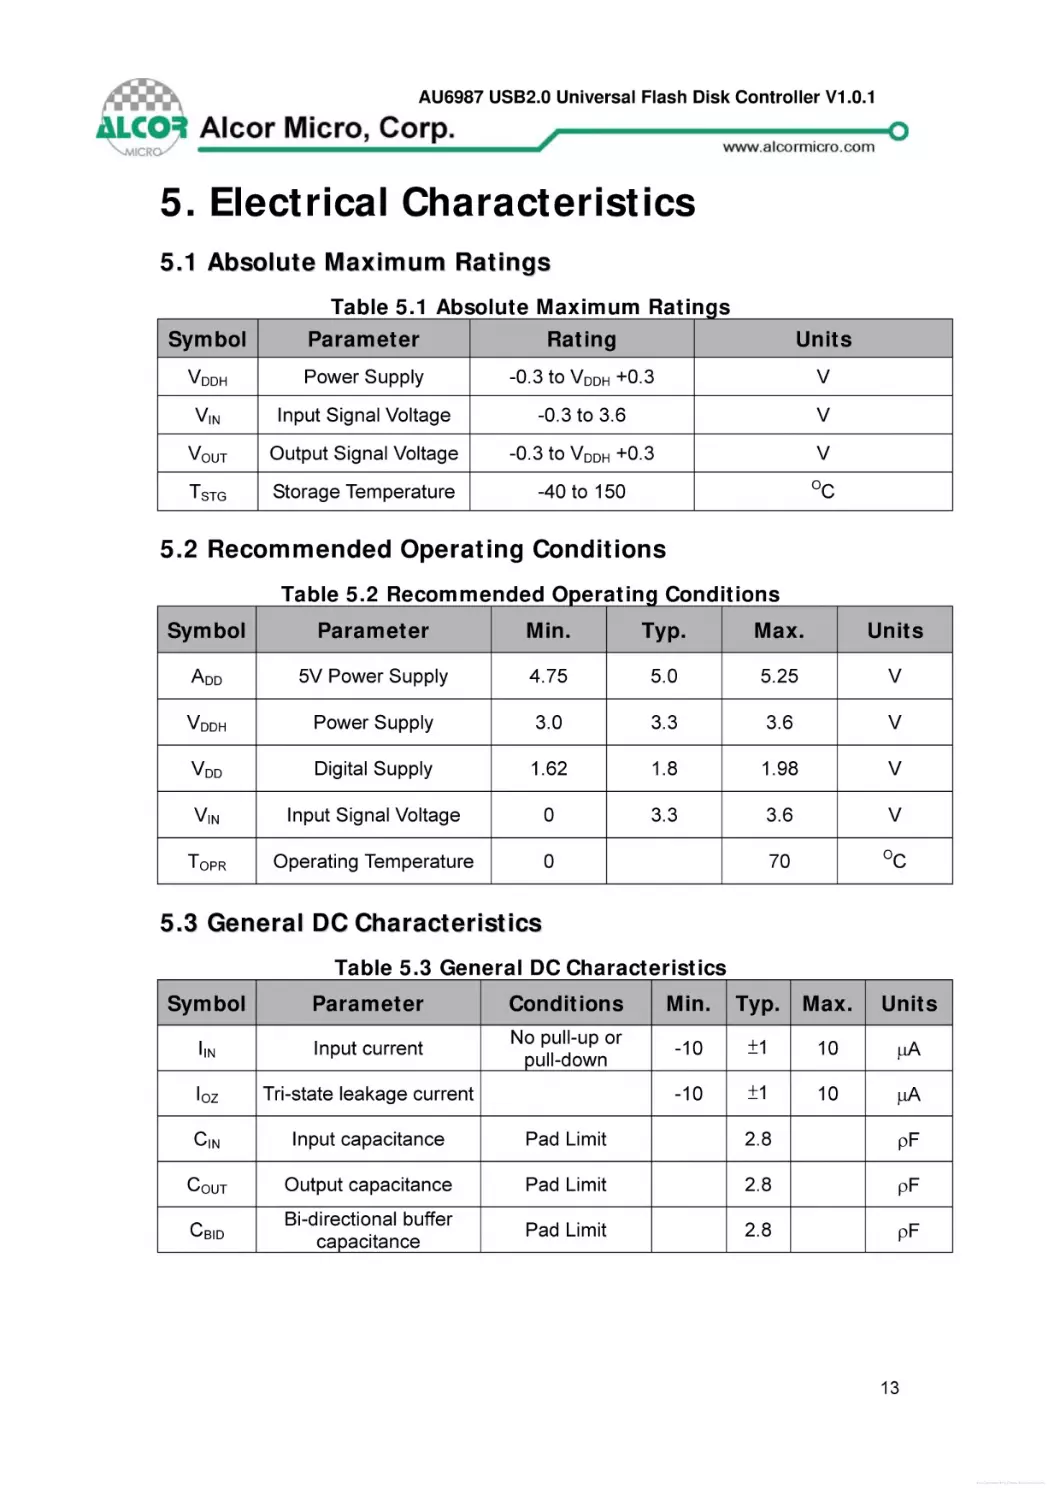 5. Electrical Characteristics
5.1 Absolute Maximum Ratings
Table 5.1 Absolute Maximum Ratings
5.2 Recommended Operating Conditions
Table 5.2 Recommended Operating Conditions
5.3 General DC Characteristics
Table 5.3 General DC Characteristics